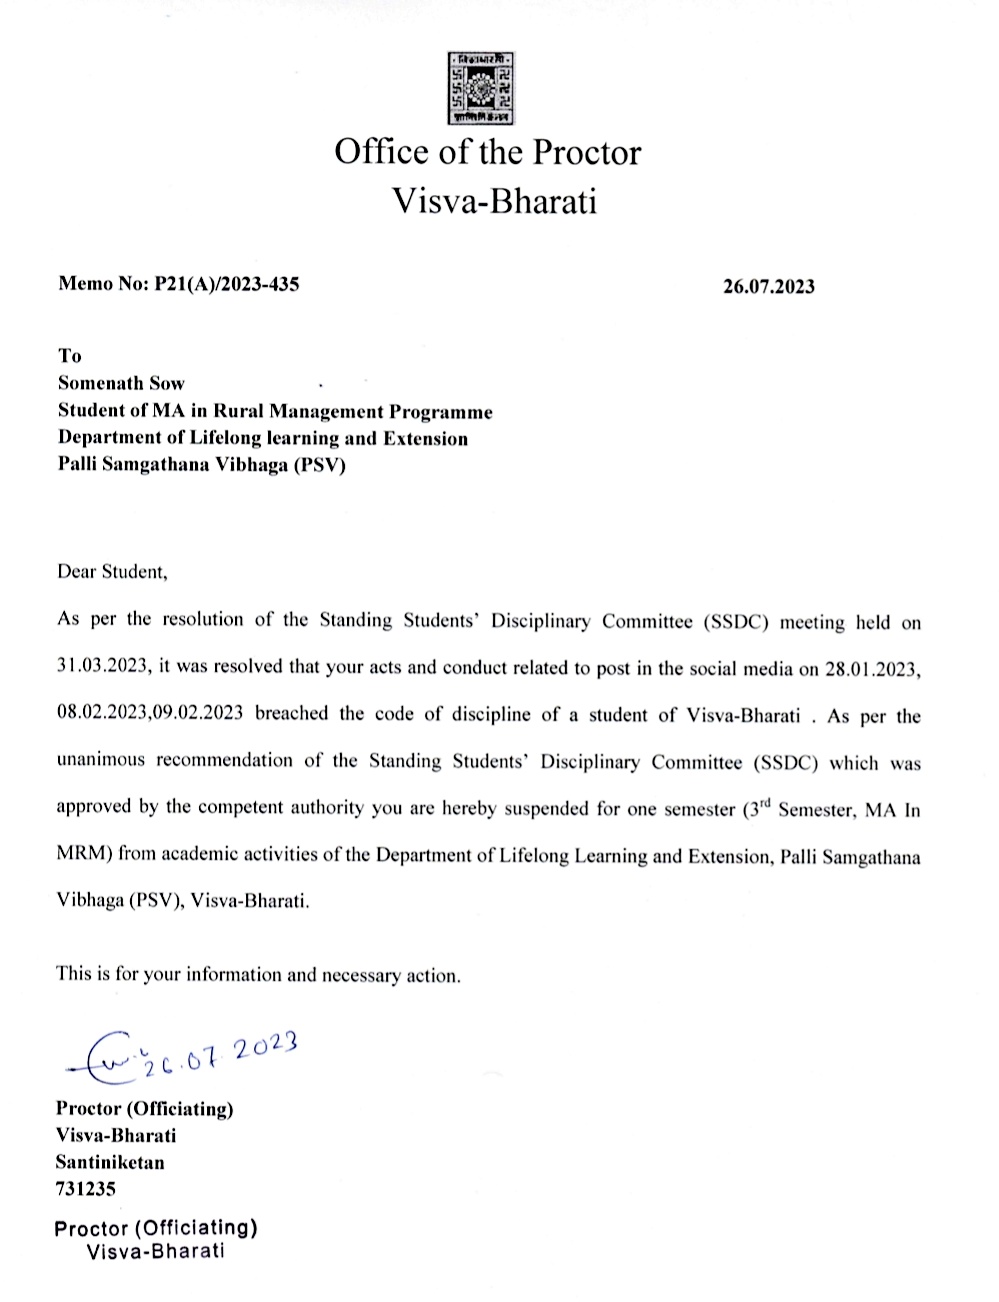 Letter to Somnath Sow by Visva Bharati